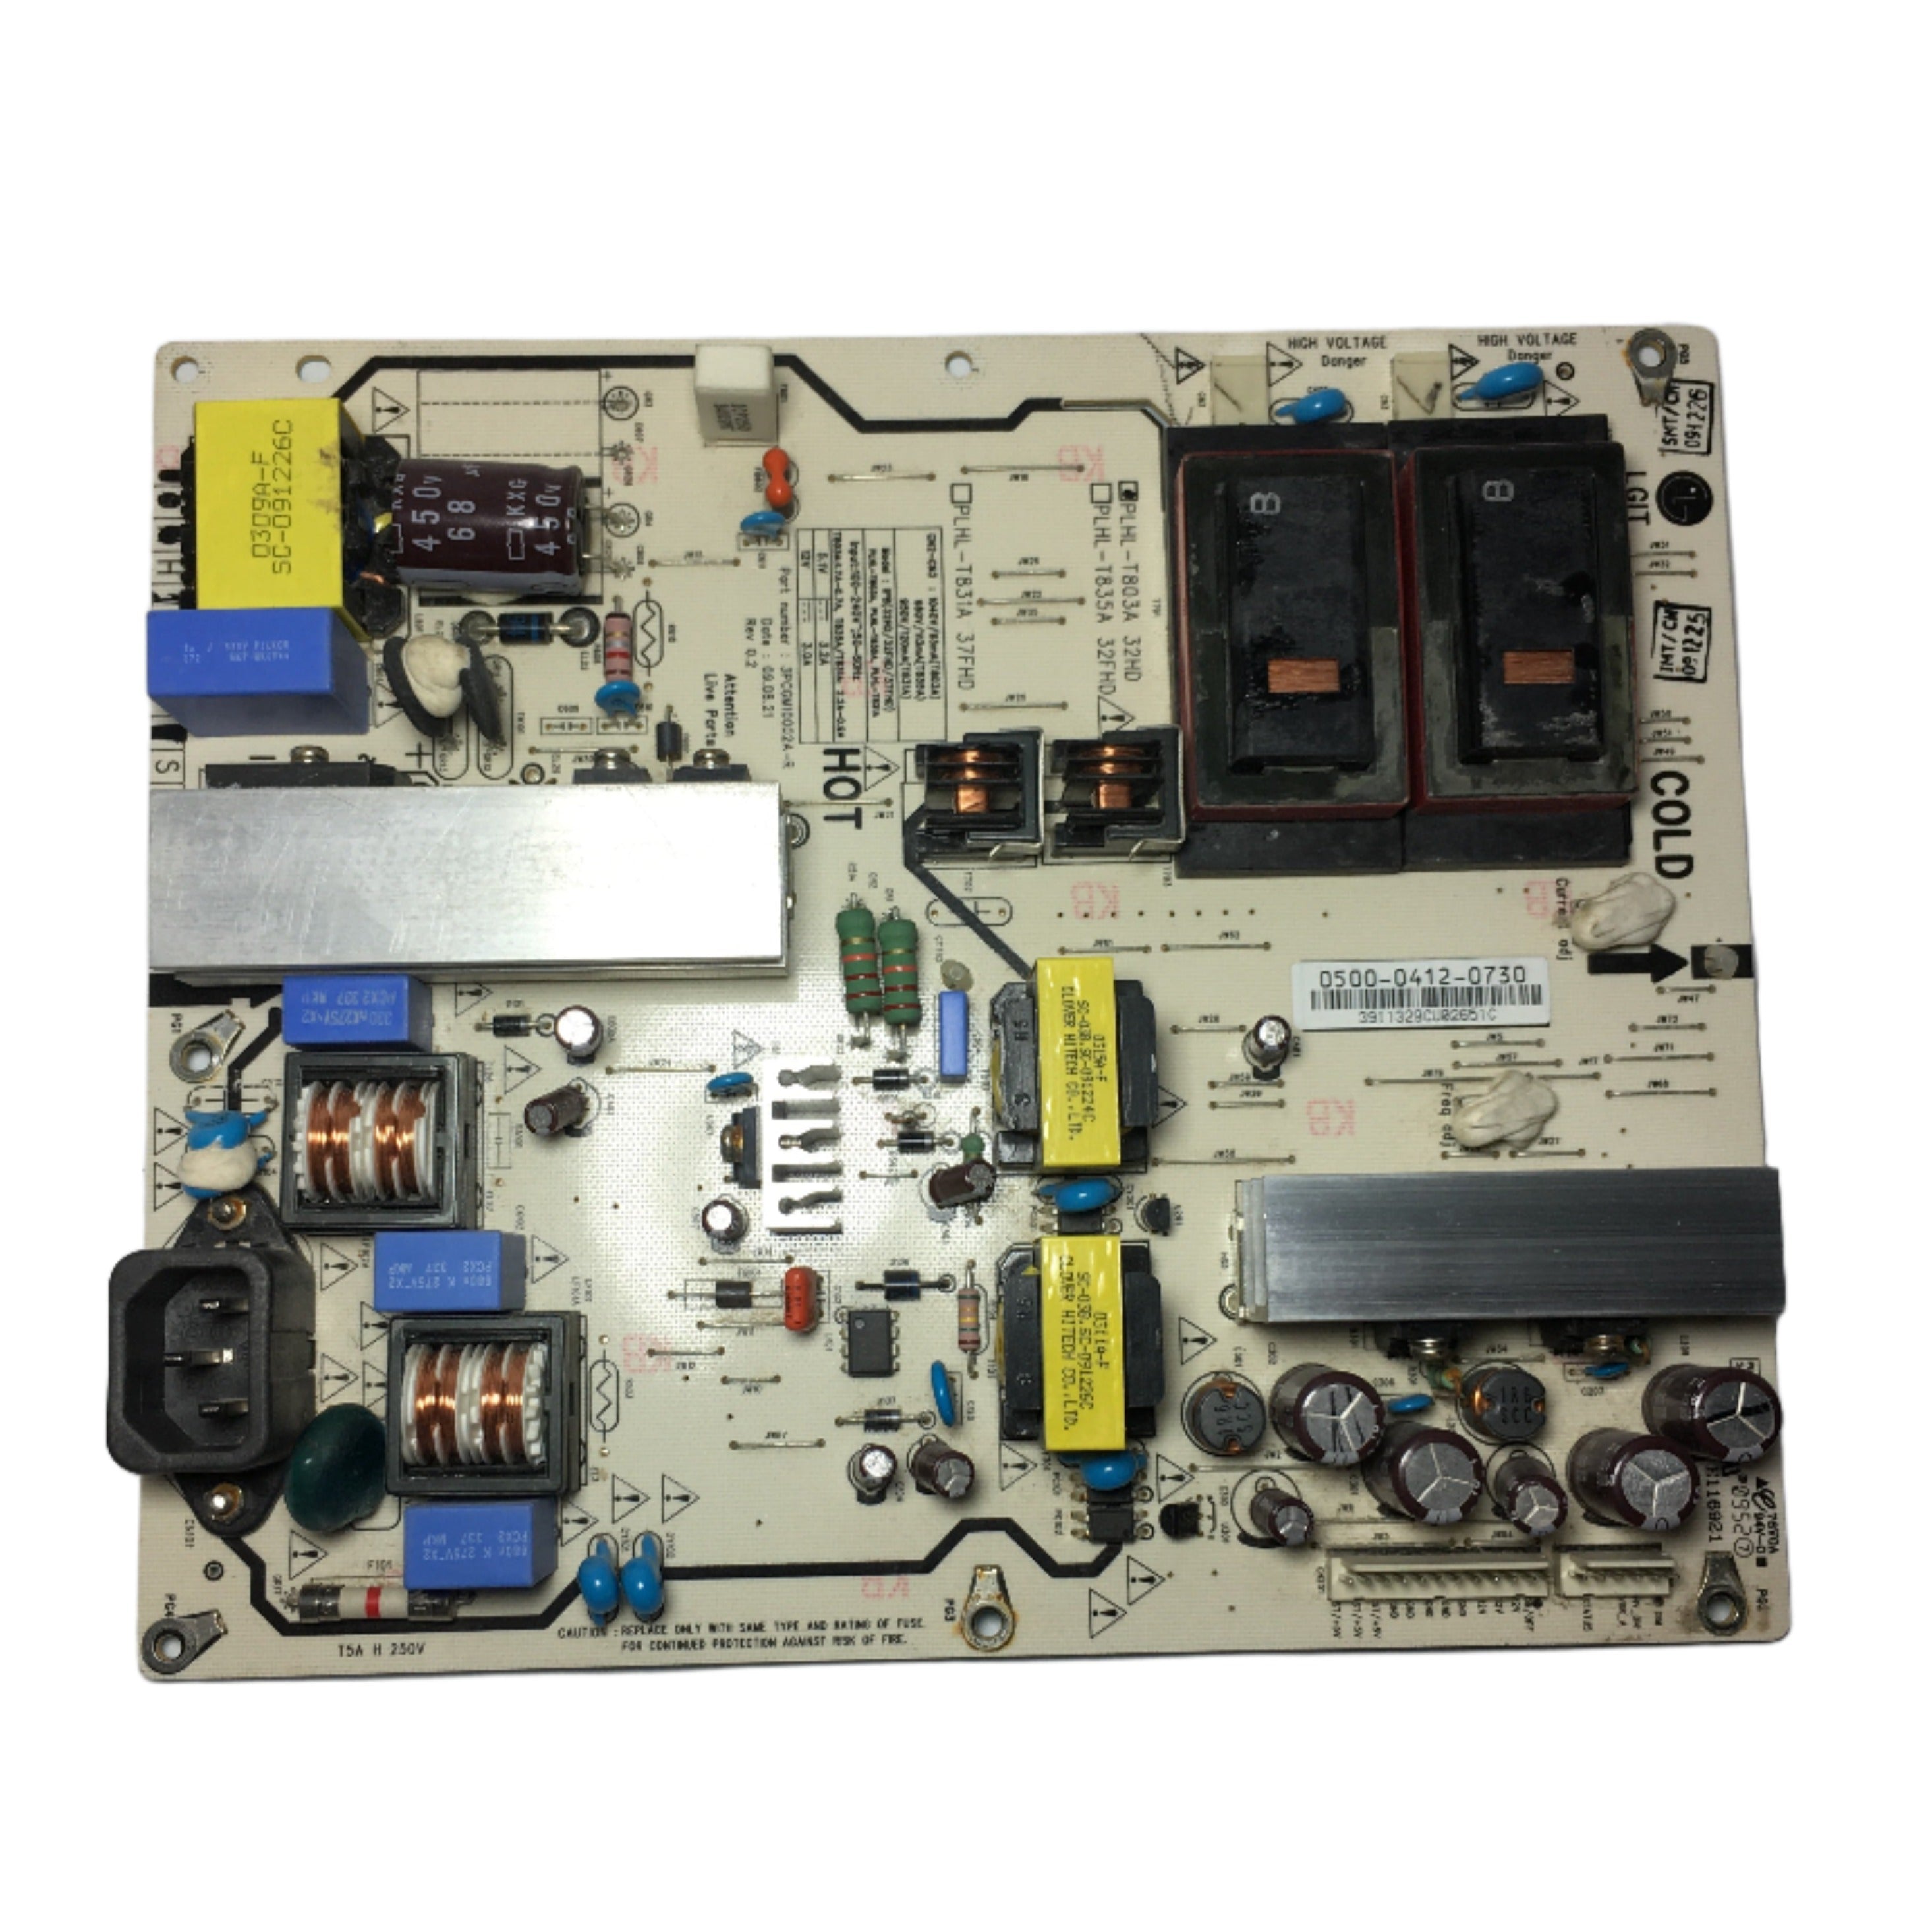 Vizio 0500-0412-0730 (PLHL-T803A) Power Supply / Backlight Inverter for VO320E